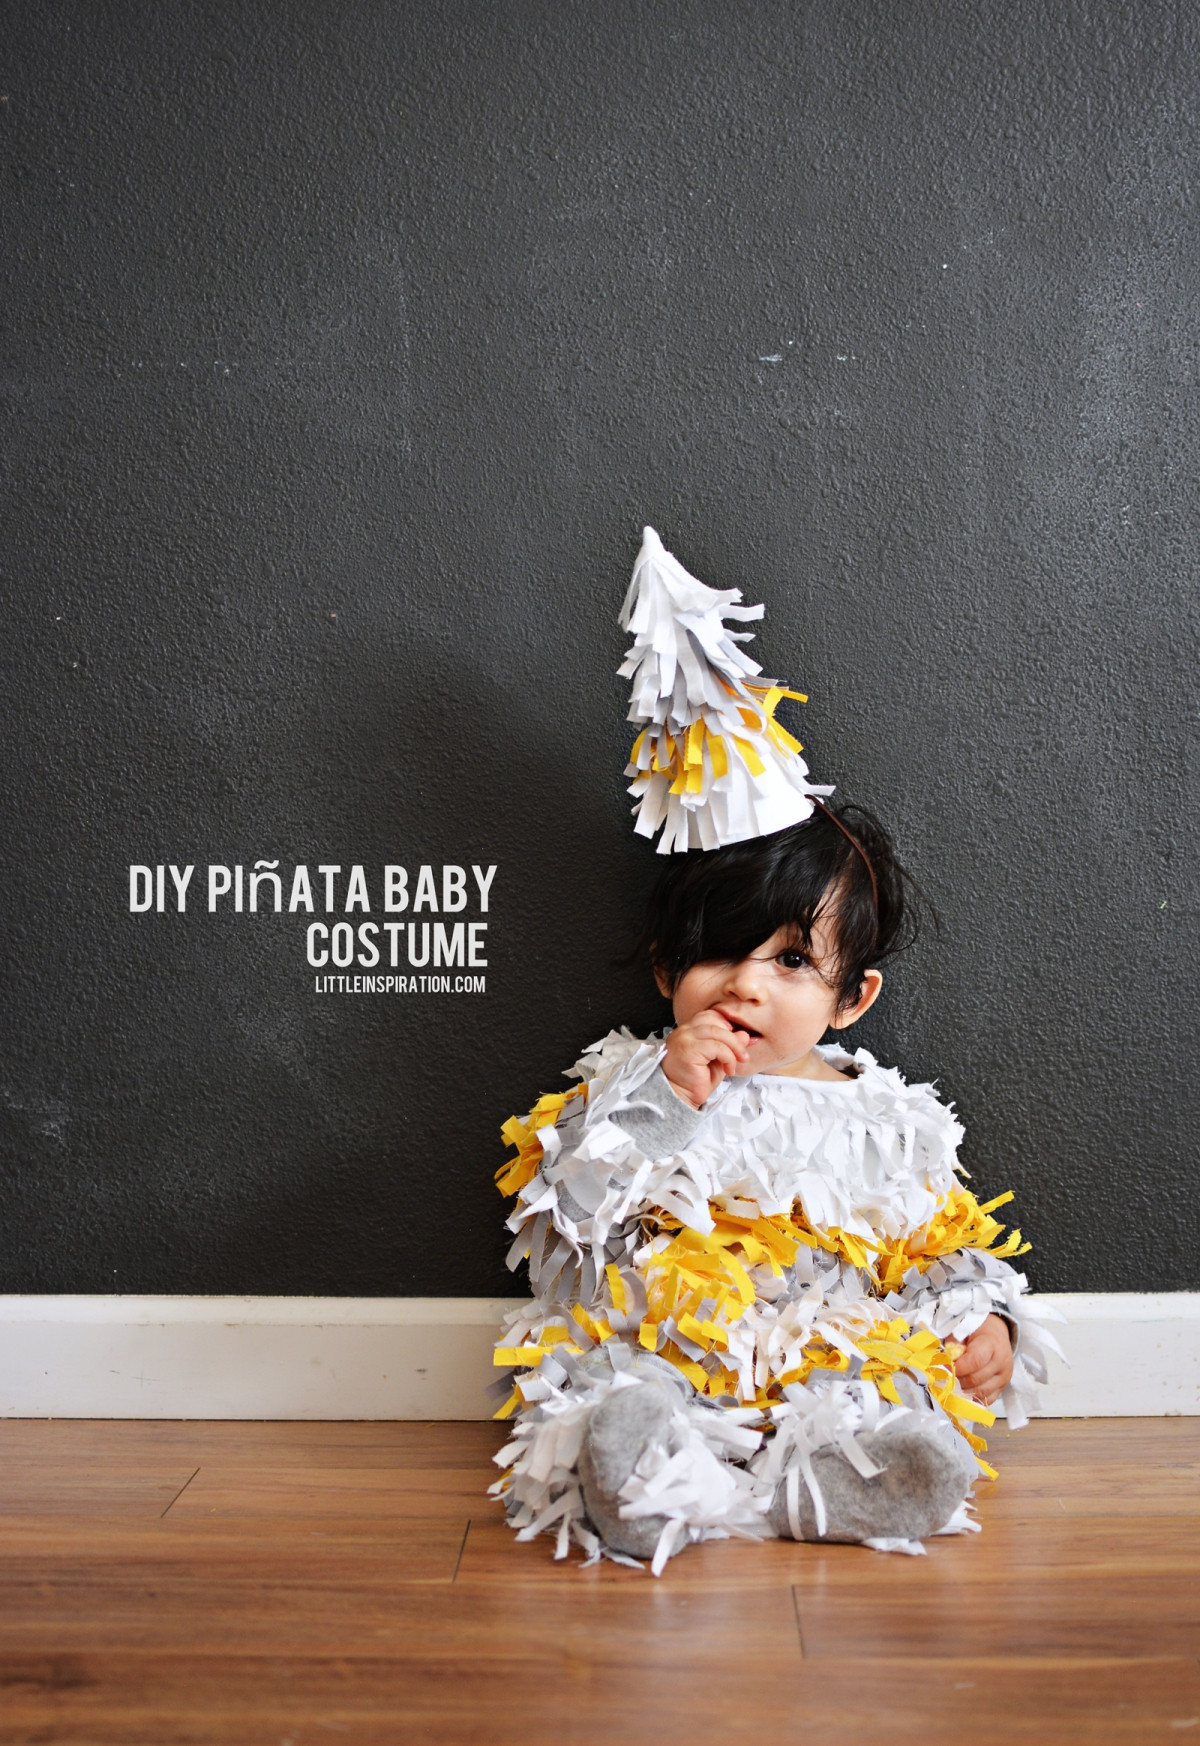 Diy Baby Costumes
 DIY Piñata Baby Costume No Sew Little Inspiration